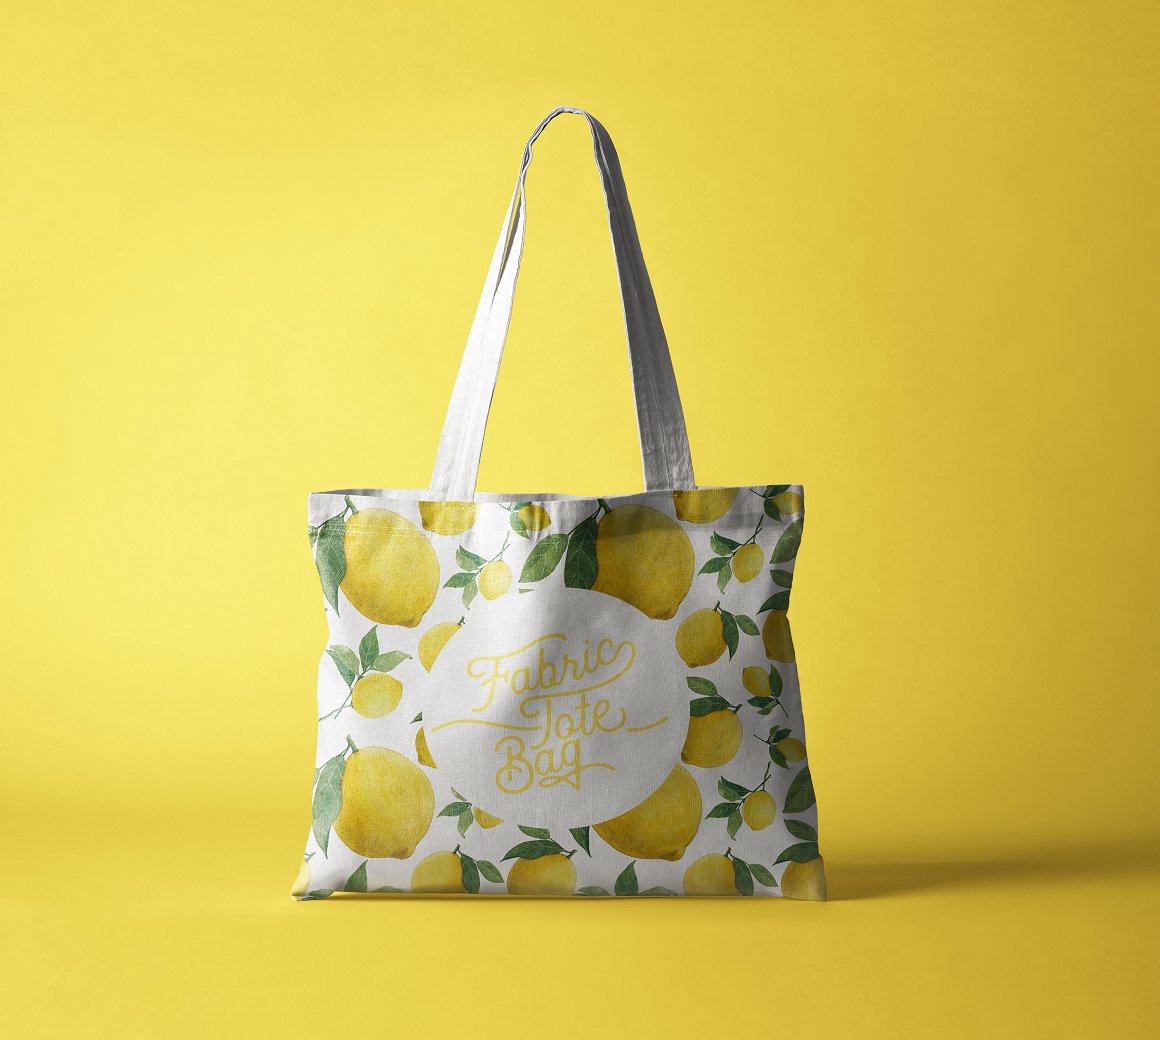 The lemon image on the bags.